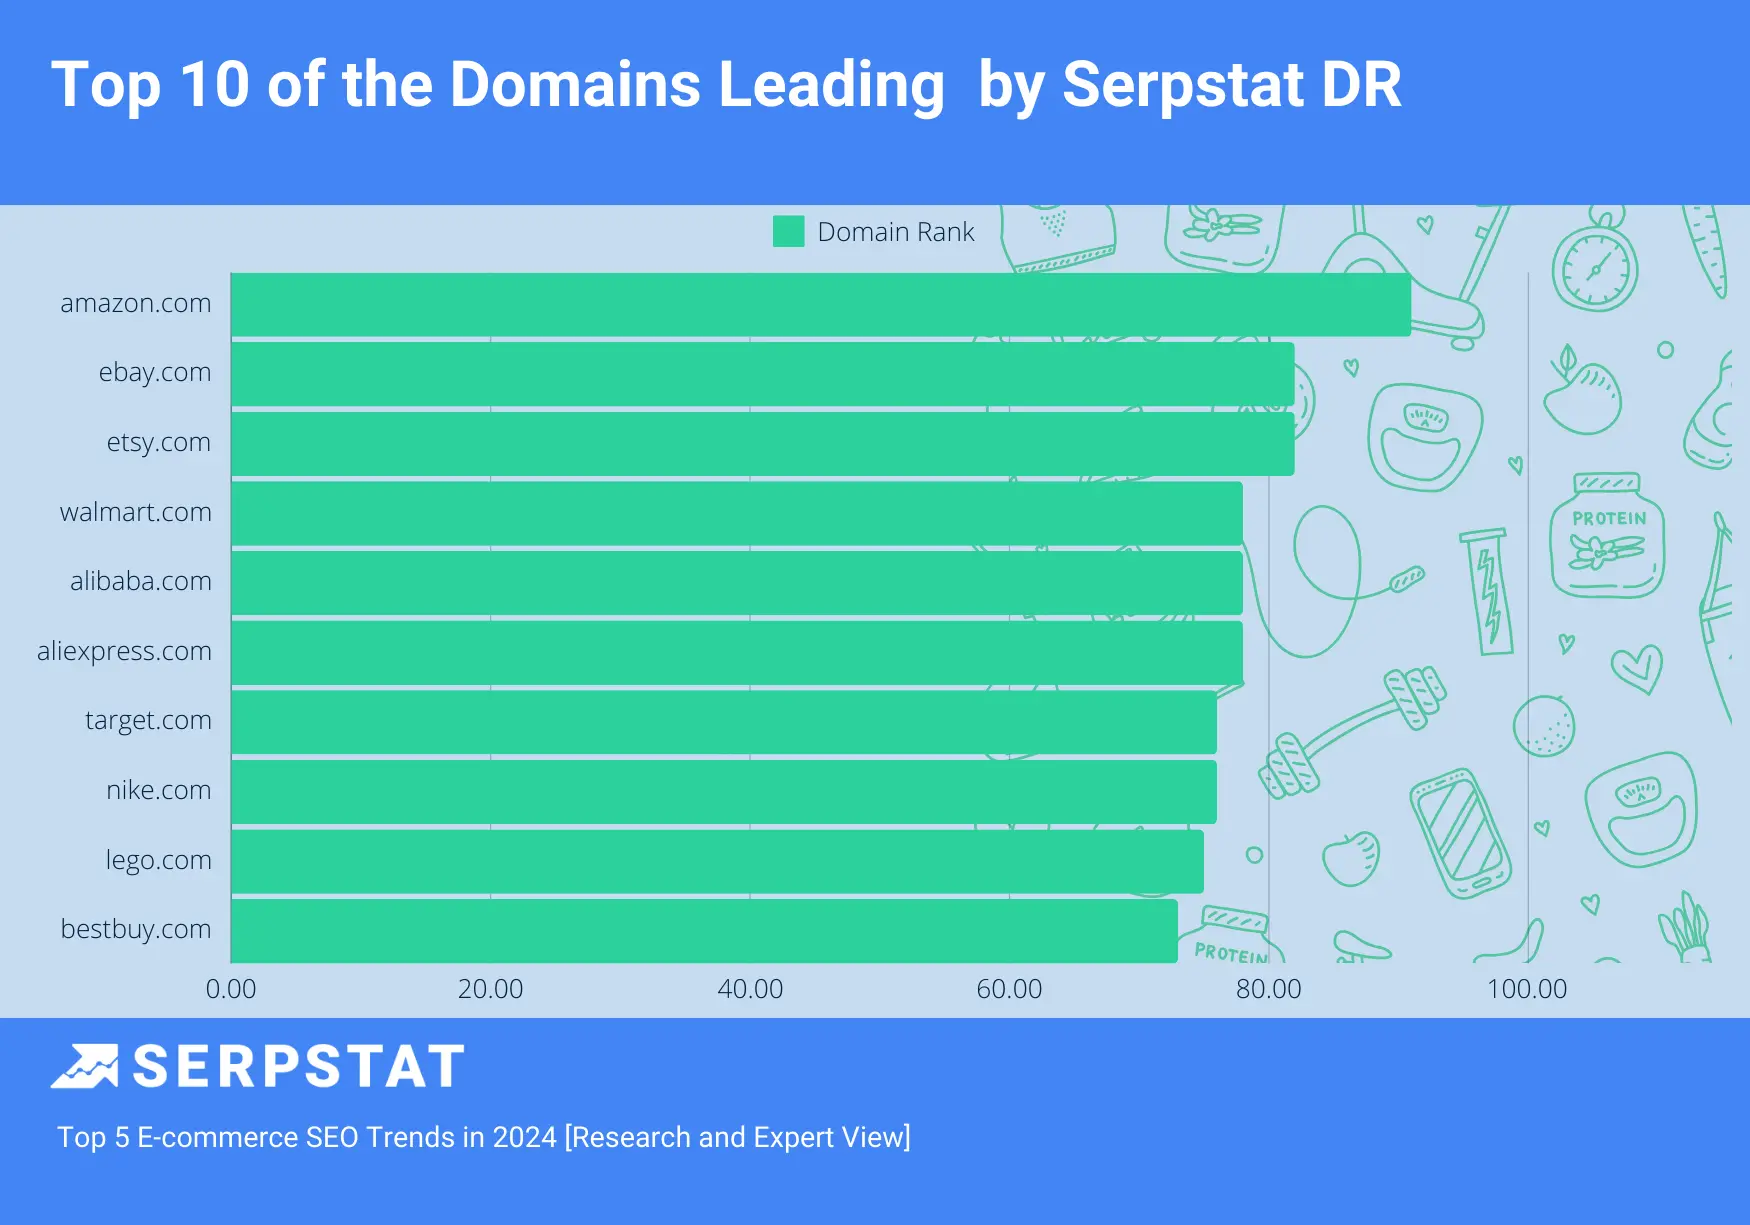 The highest domain rank in e-commerce